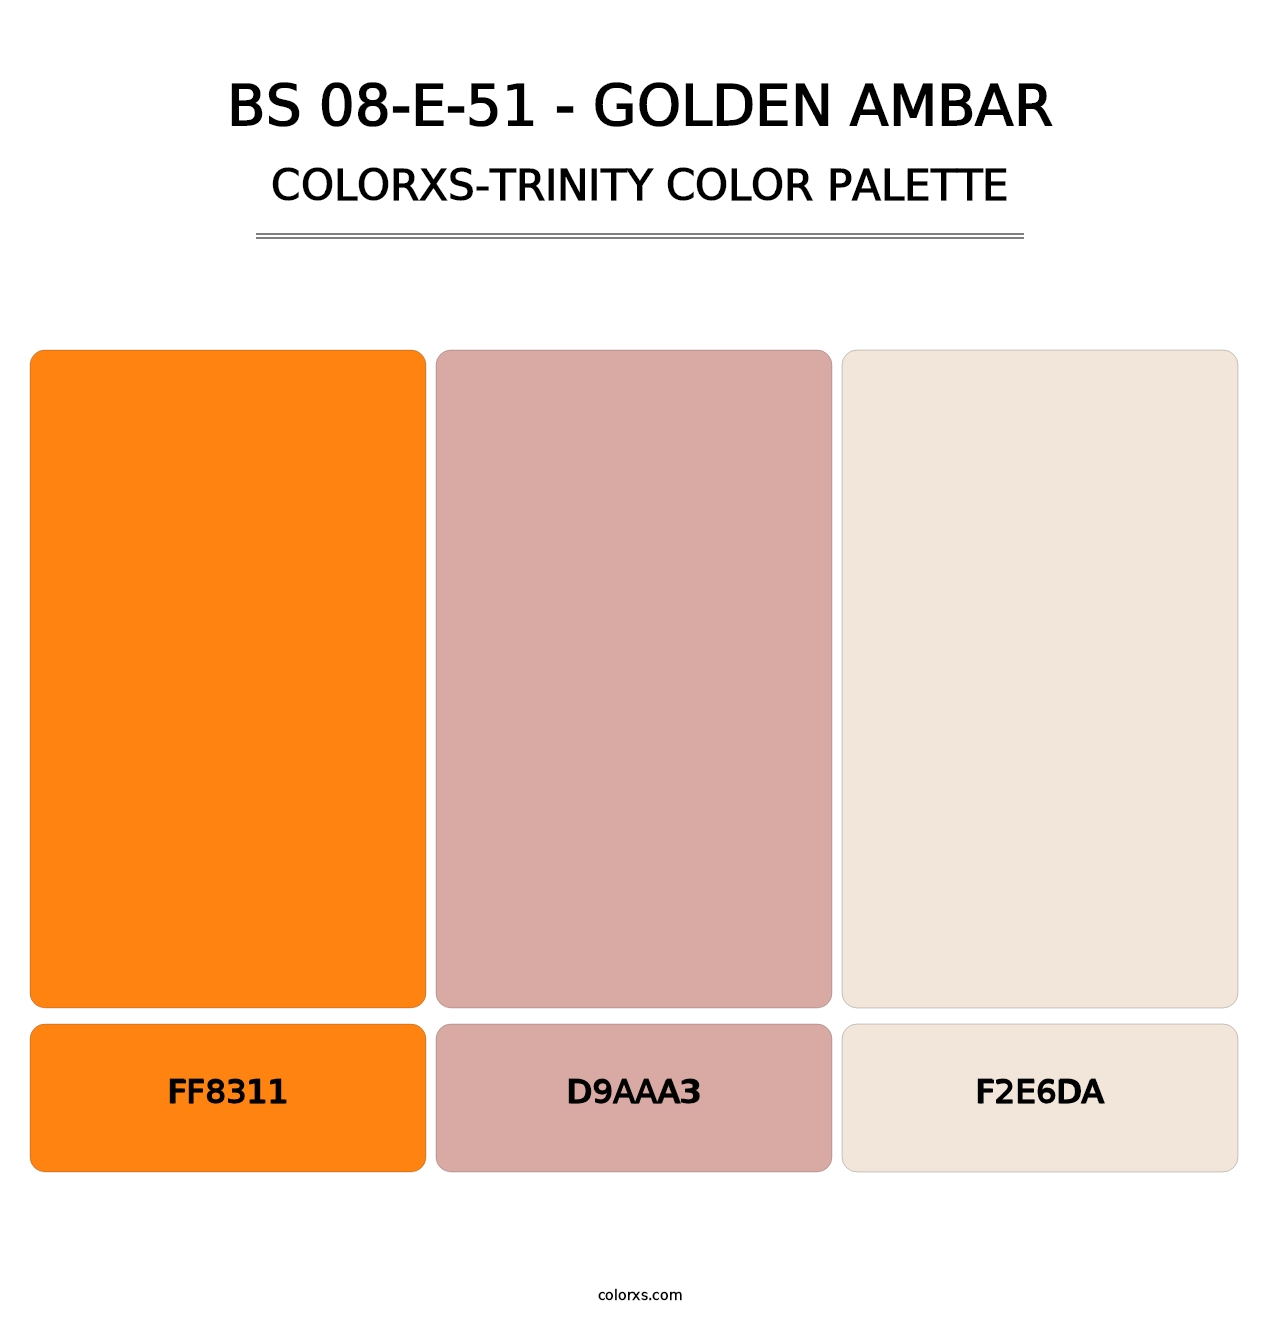 BS 08-E-51 - Golden Ambar - Colorxs Trinity Palette